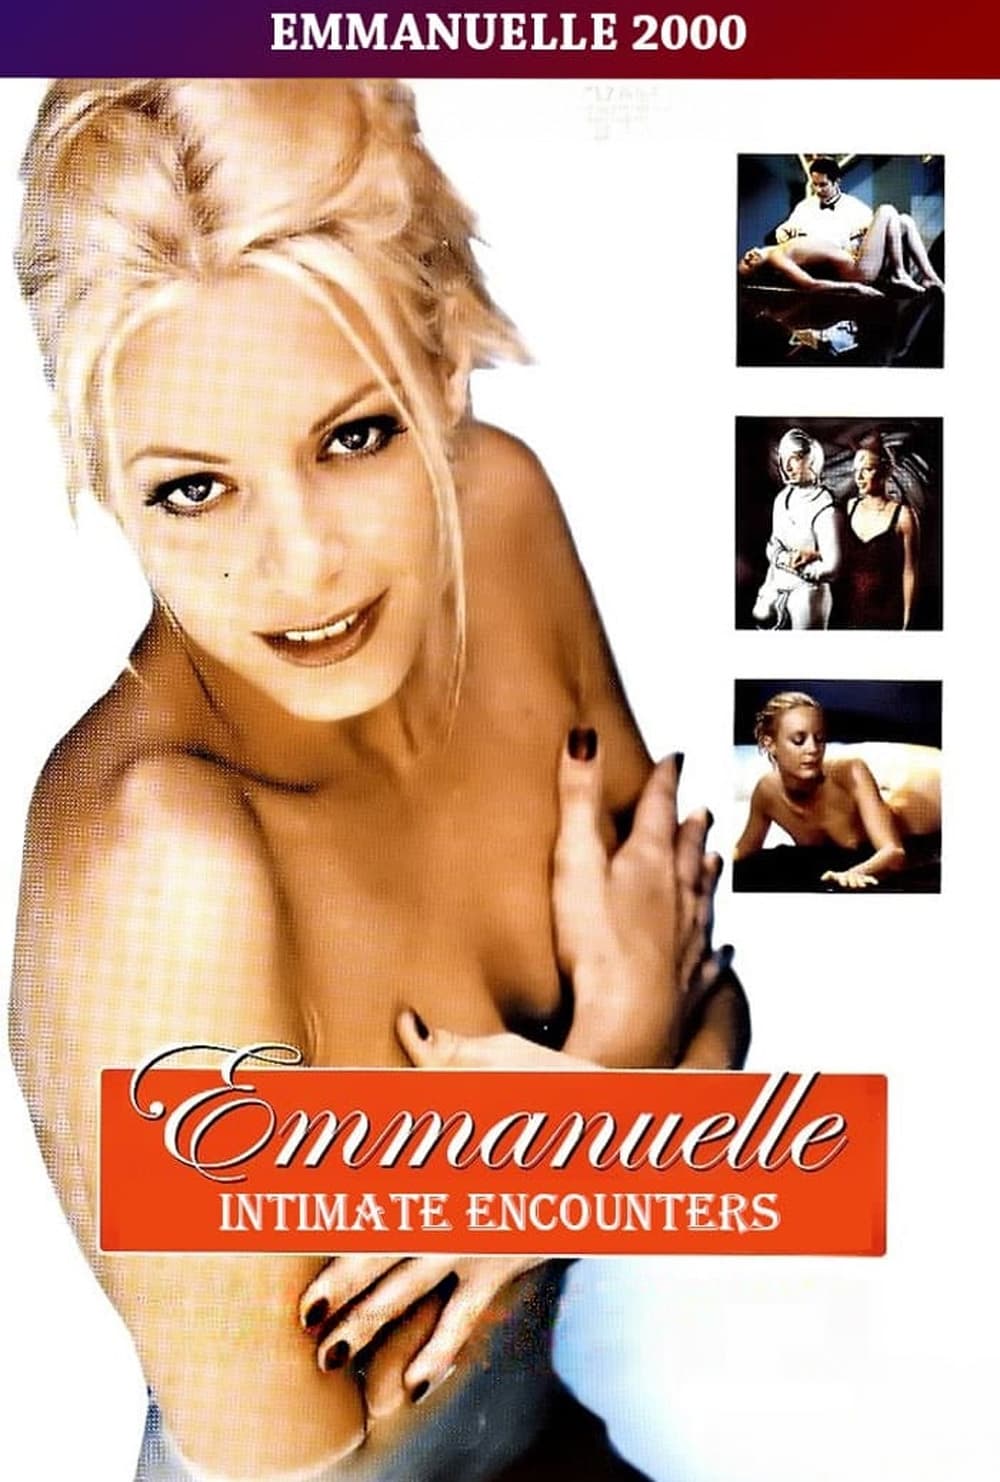 Emmanuelle 2000: Emmanuelle's Intimate Encounters